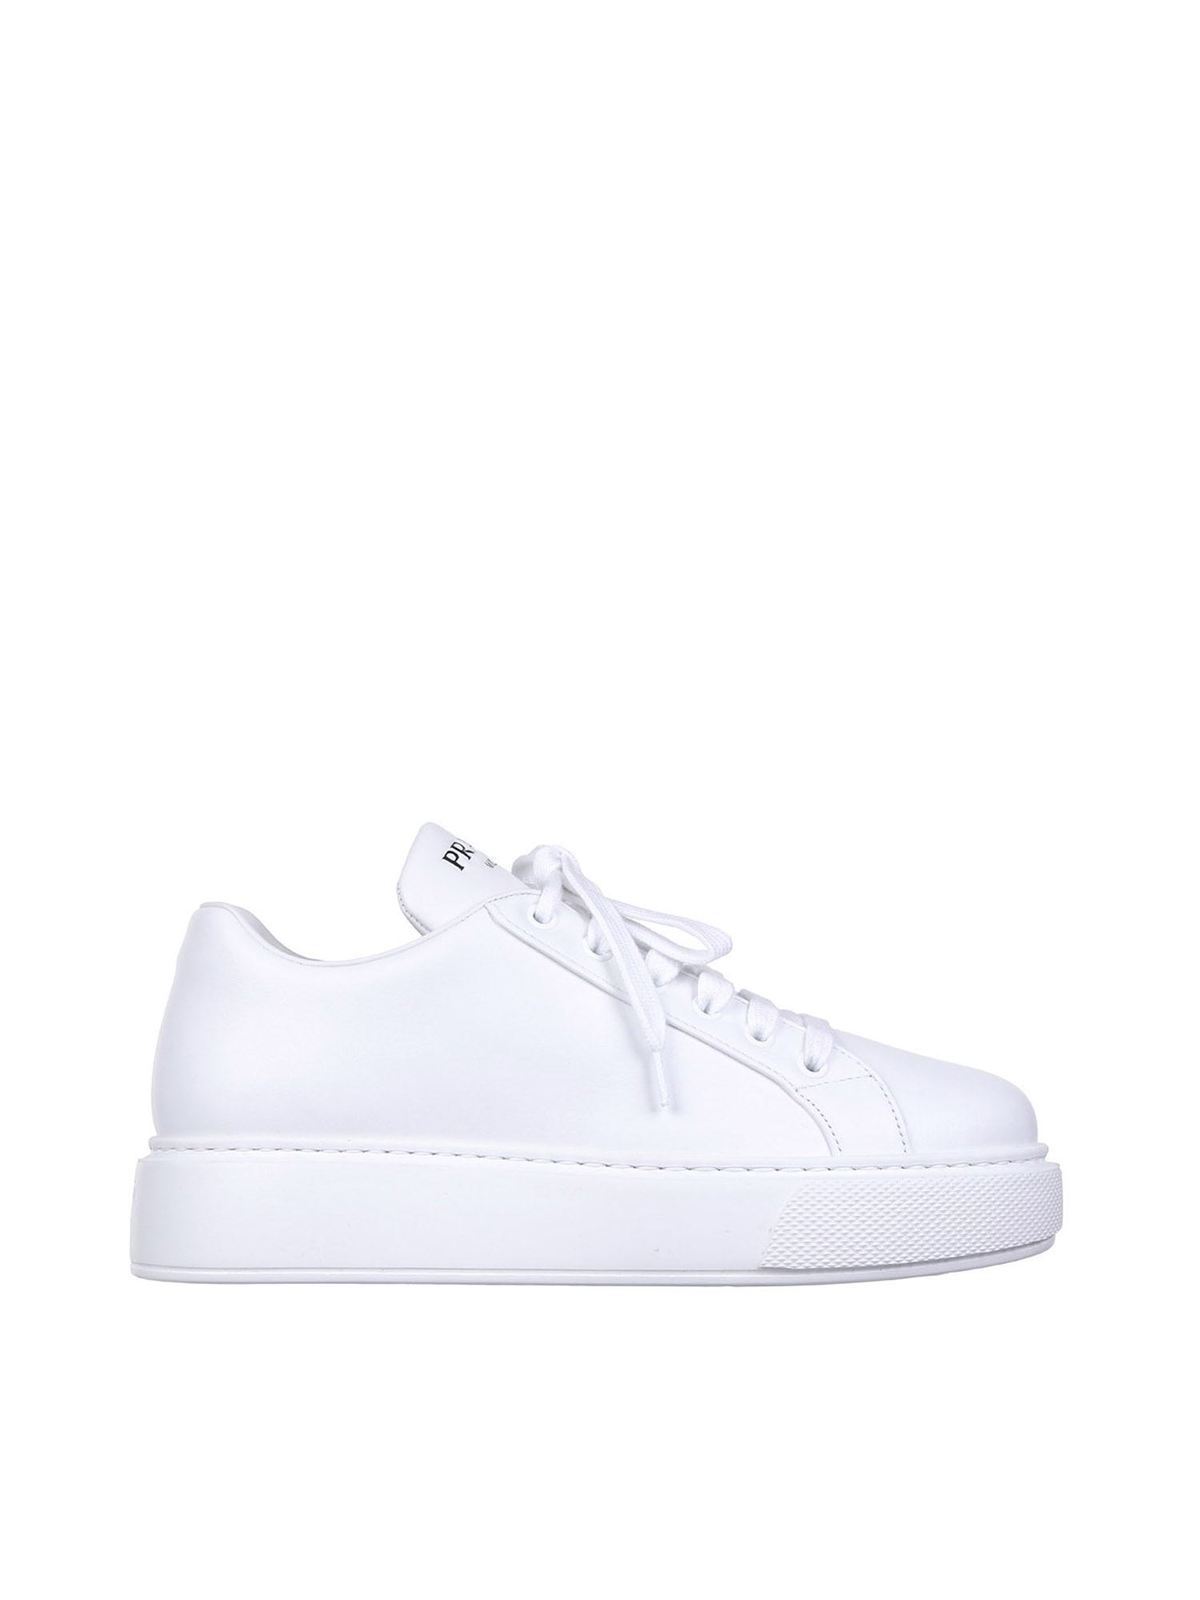 Prada - Platform sole sneakers in white 